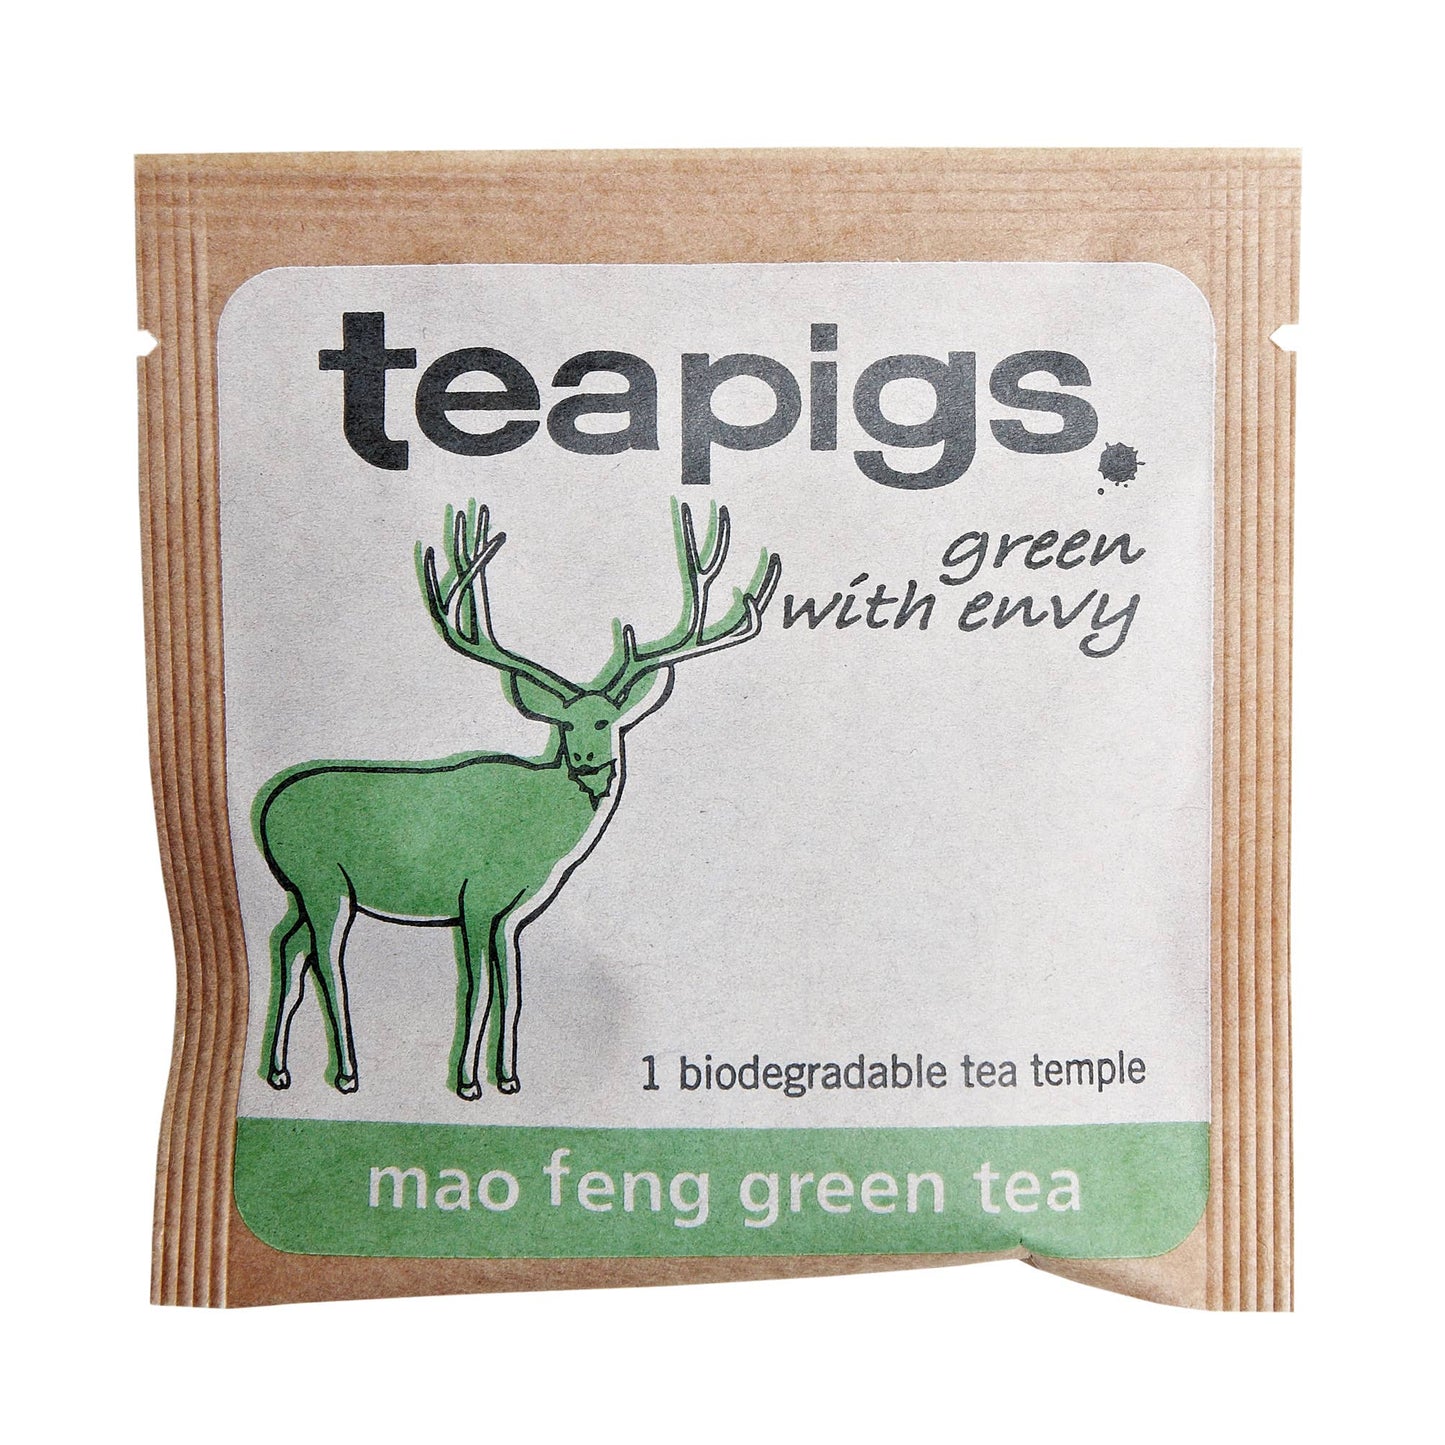 teapigs Envelopes: Chai